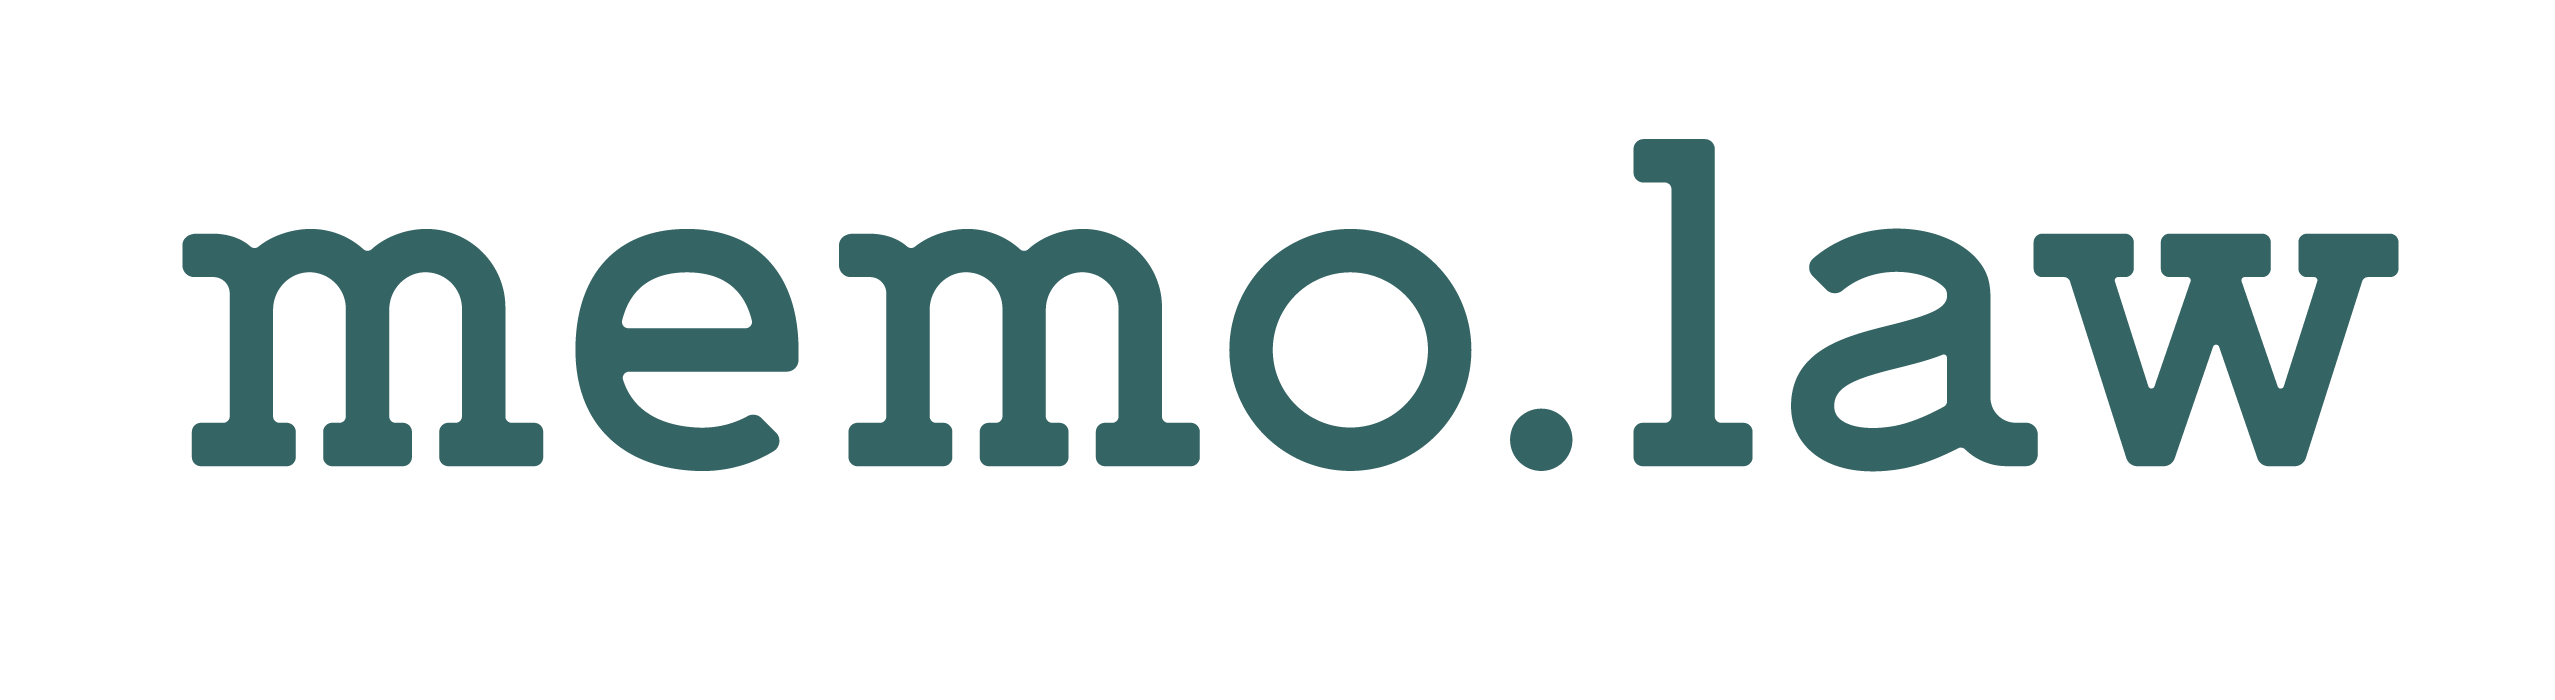 Memo Logotype